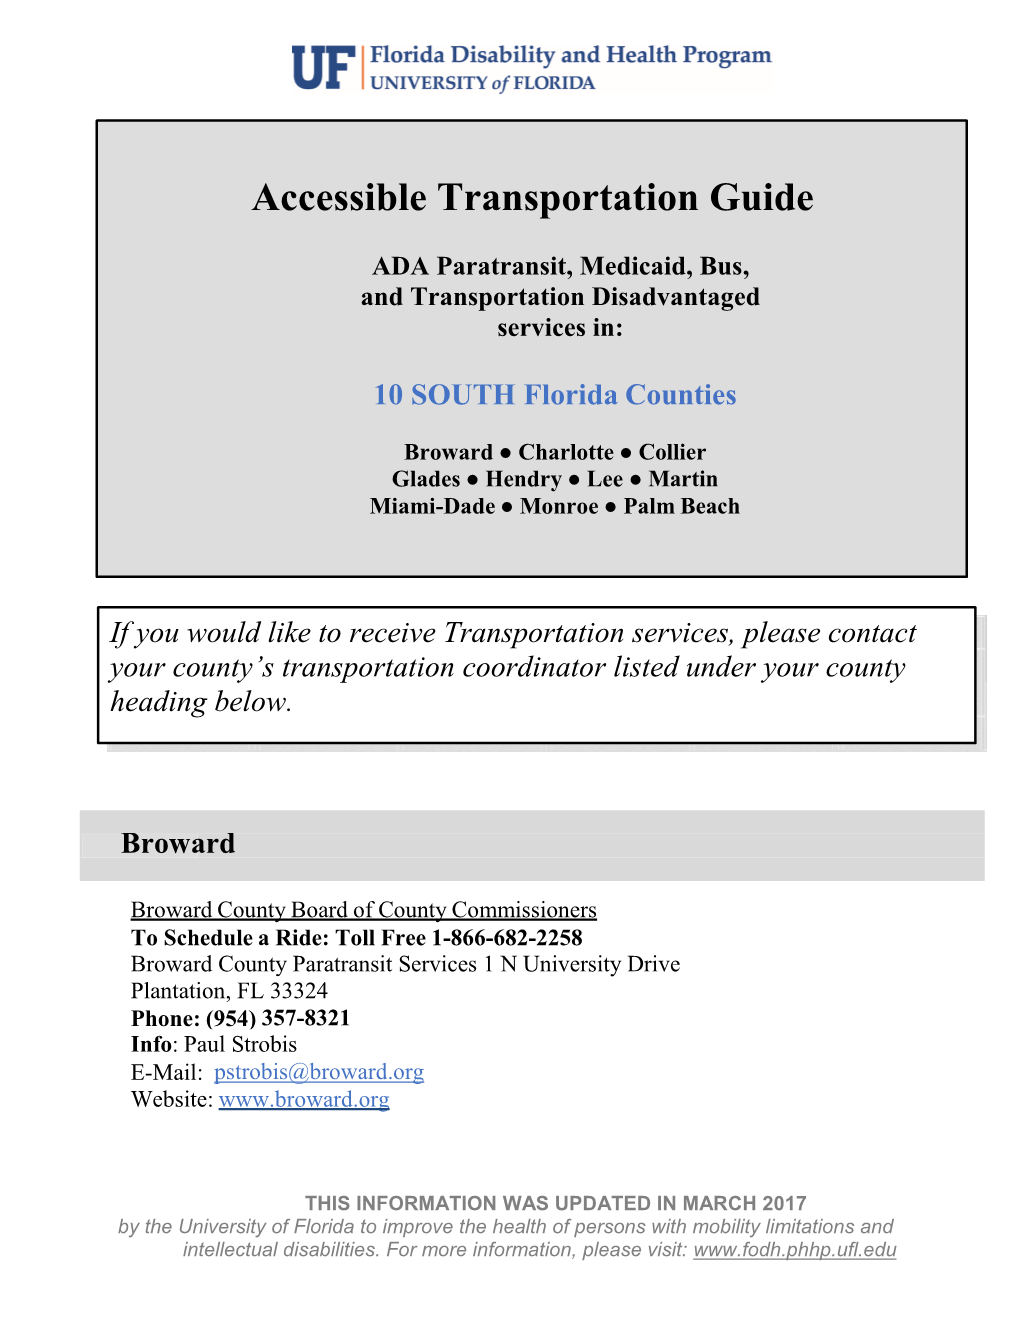 South Florida Transportation Guide